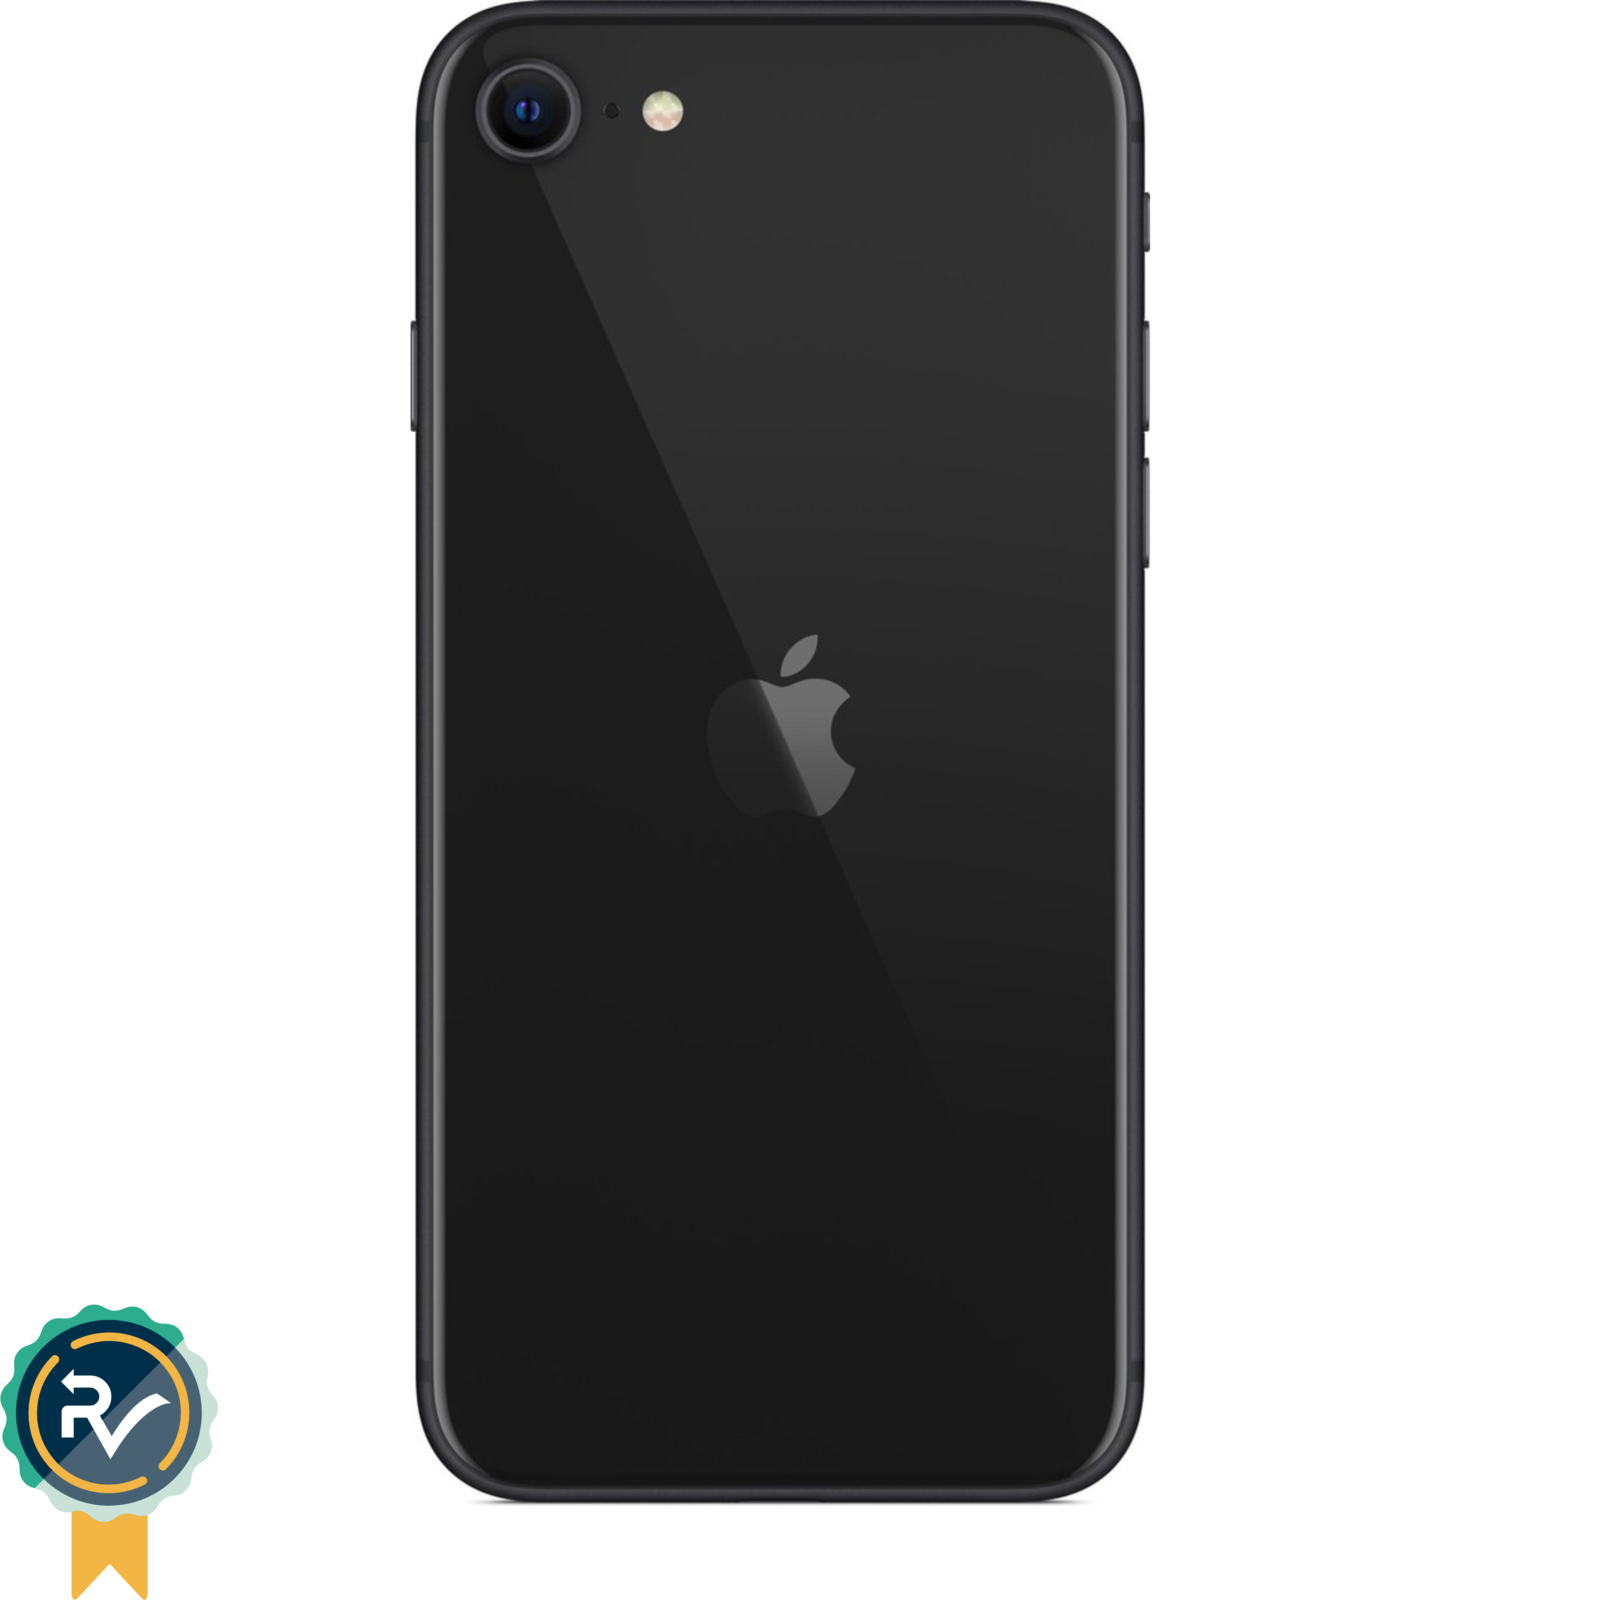 Apple iPhone SE 2020 128GB Zwart